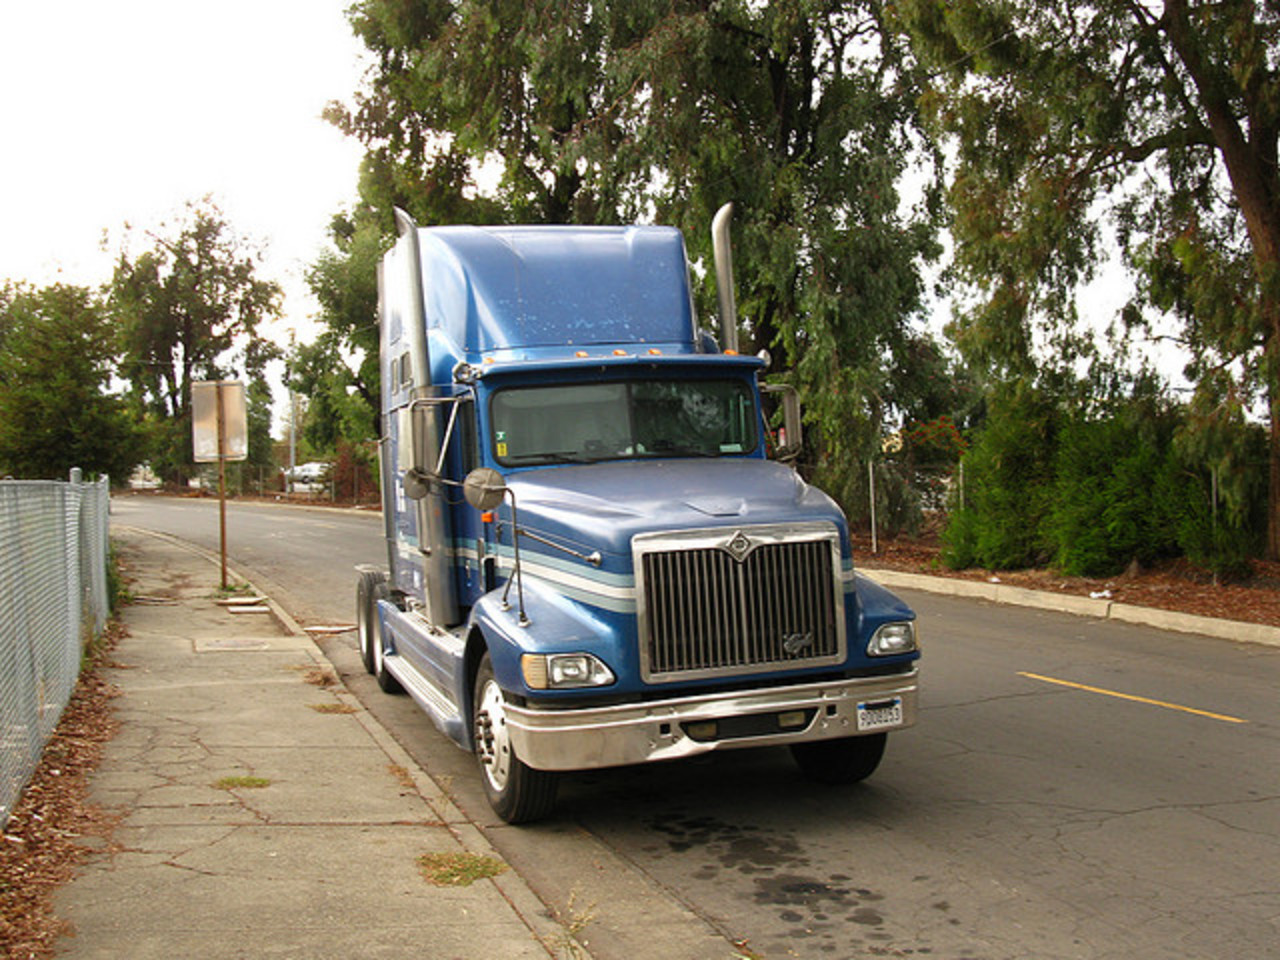 more International trucks - a gallery on Flickr